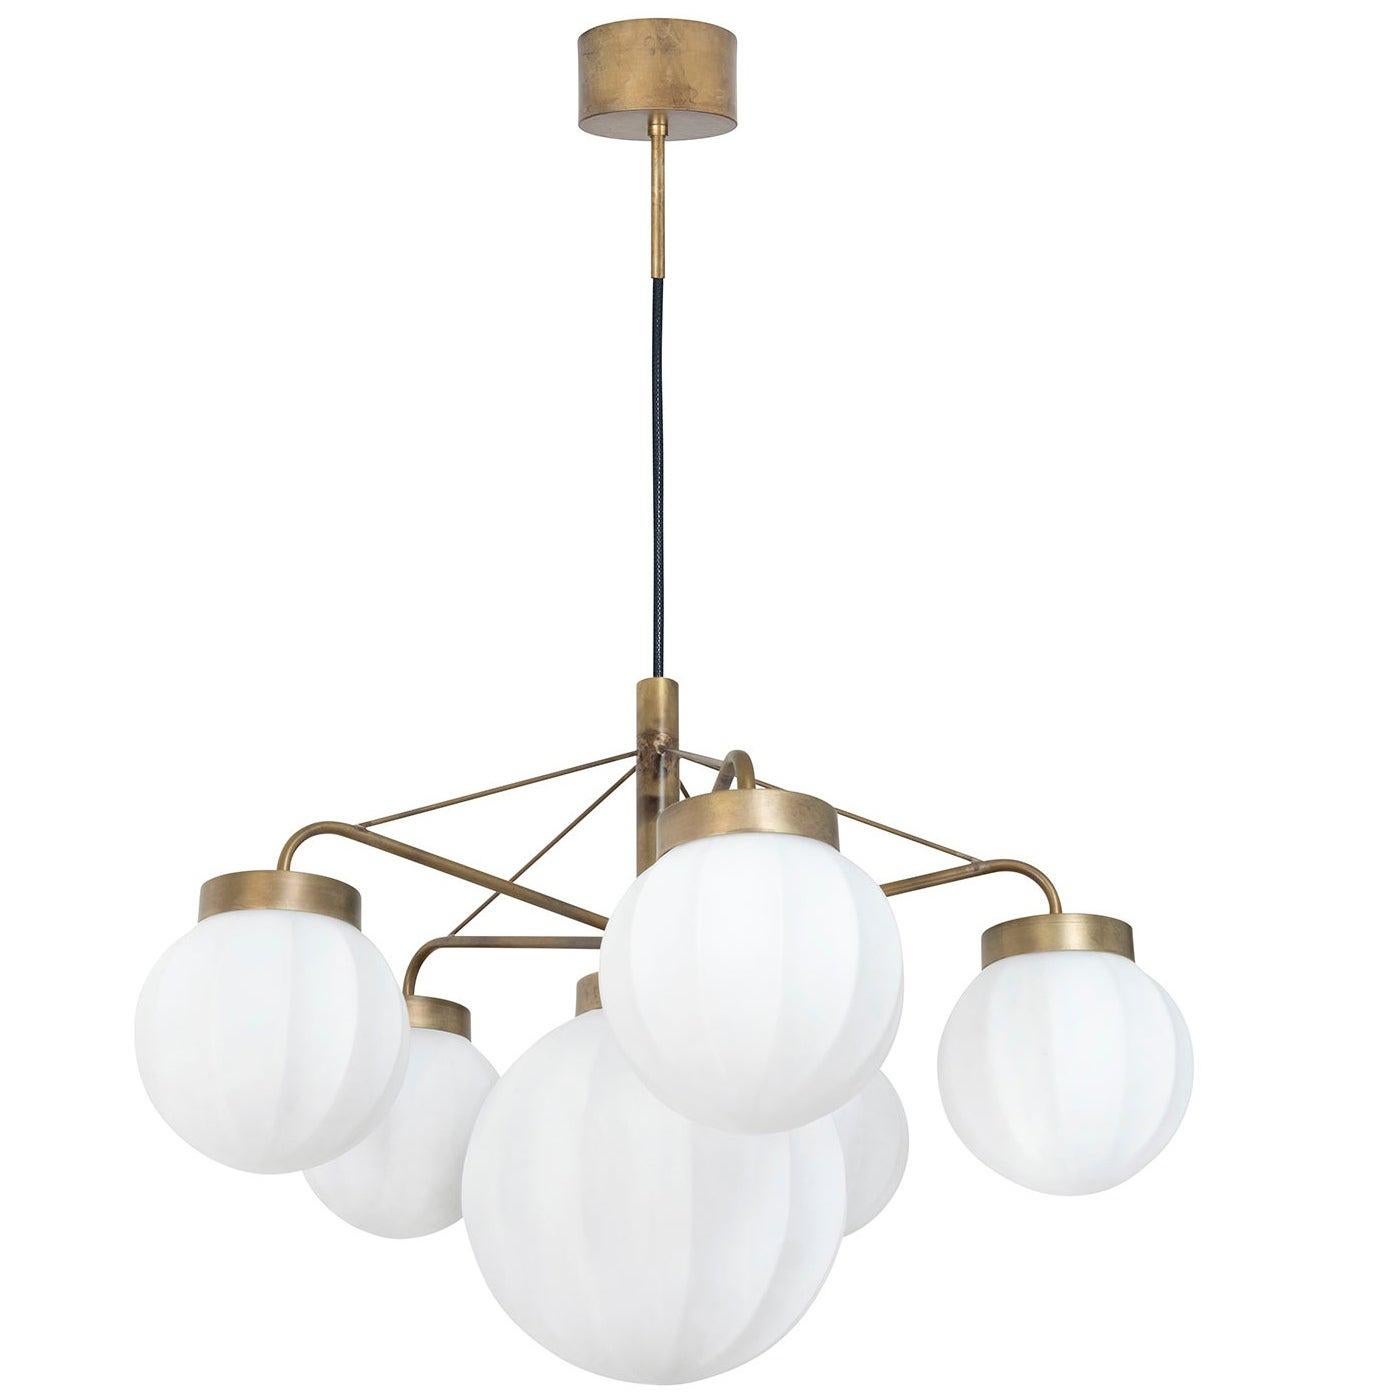 Johan Carpner Klyfta 6L Raw Brass Ceiling Lamp by Konsthantverk